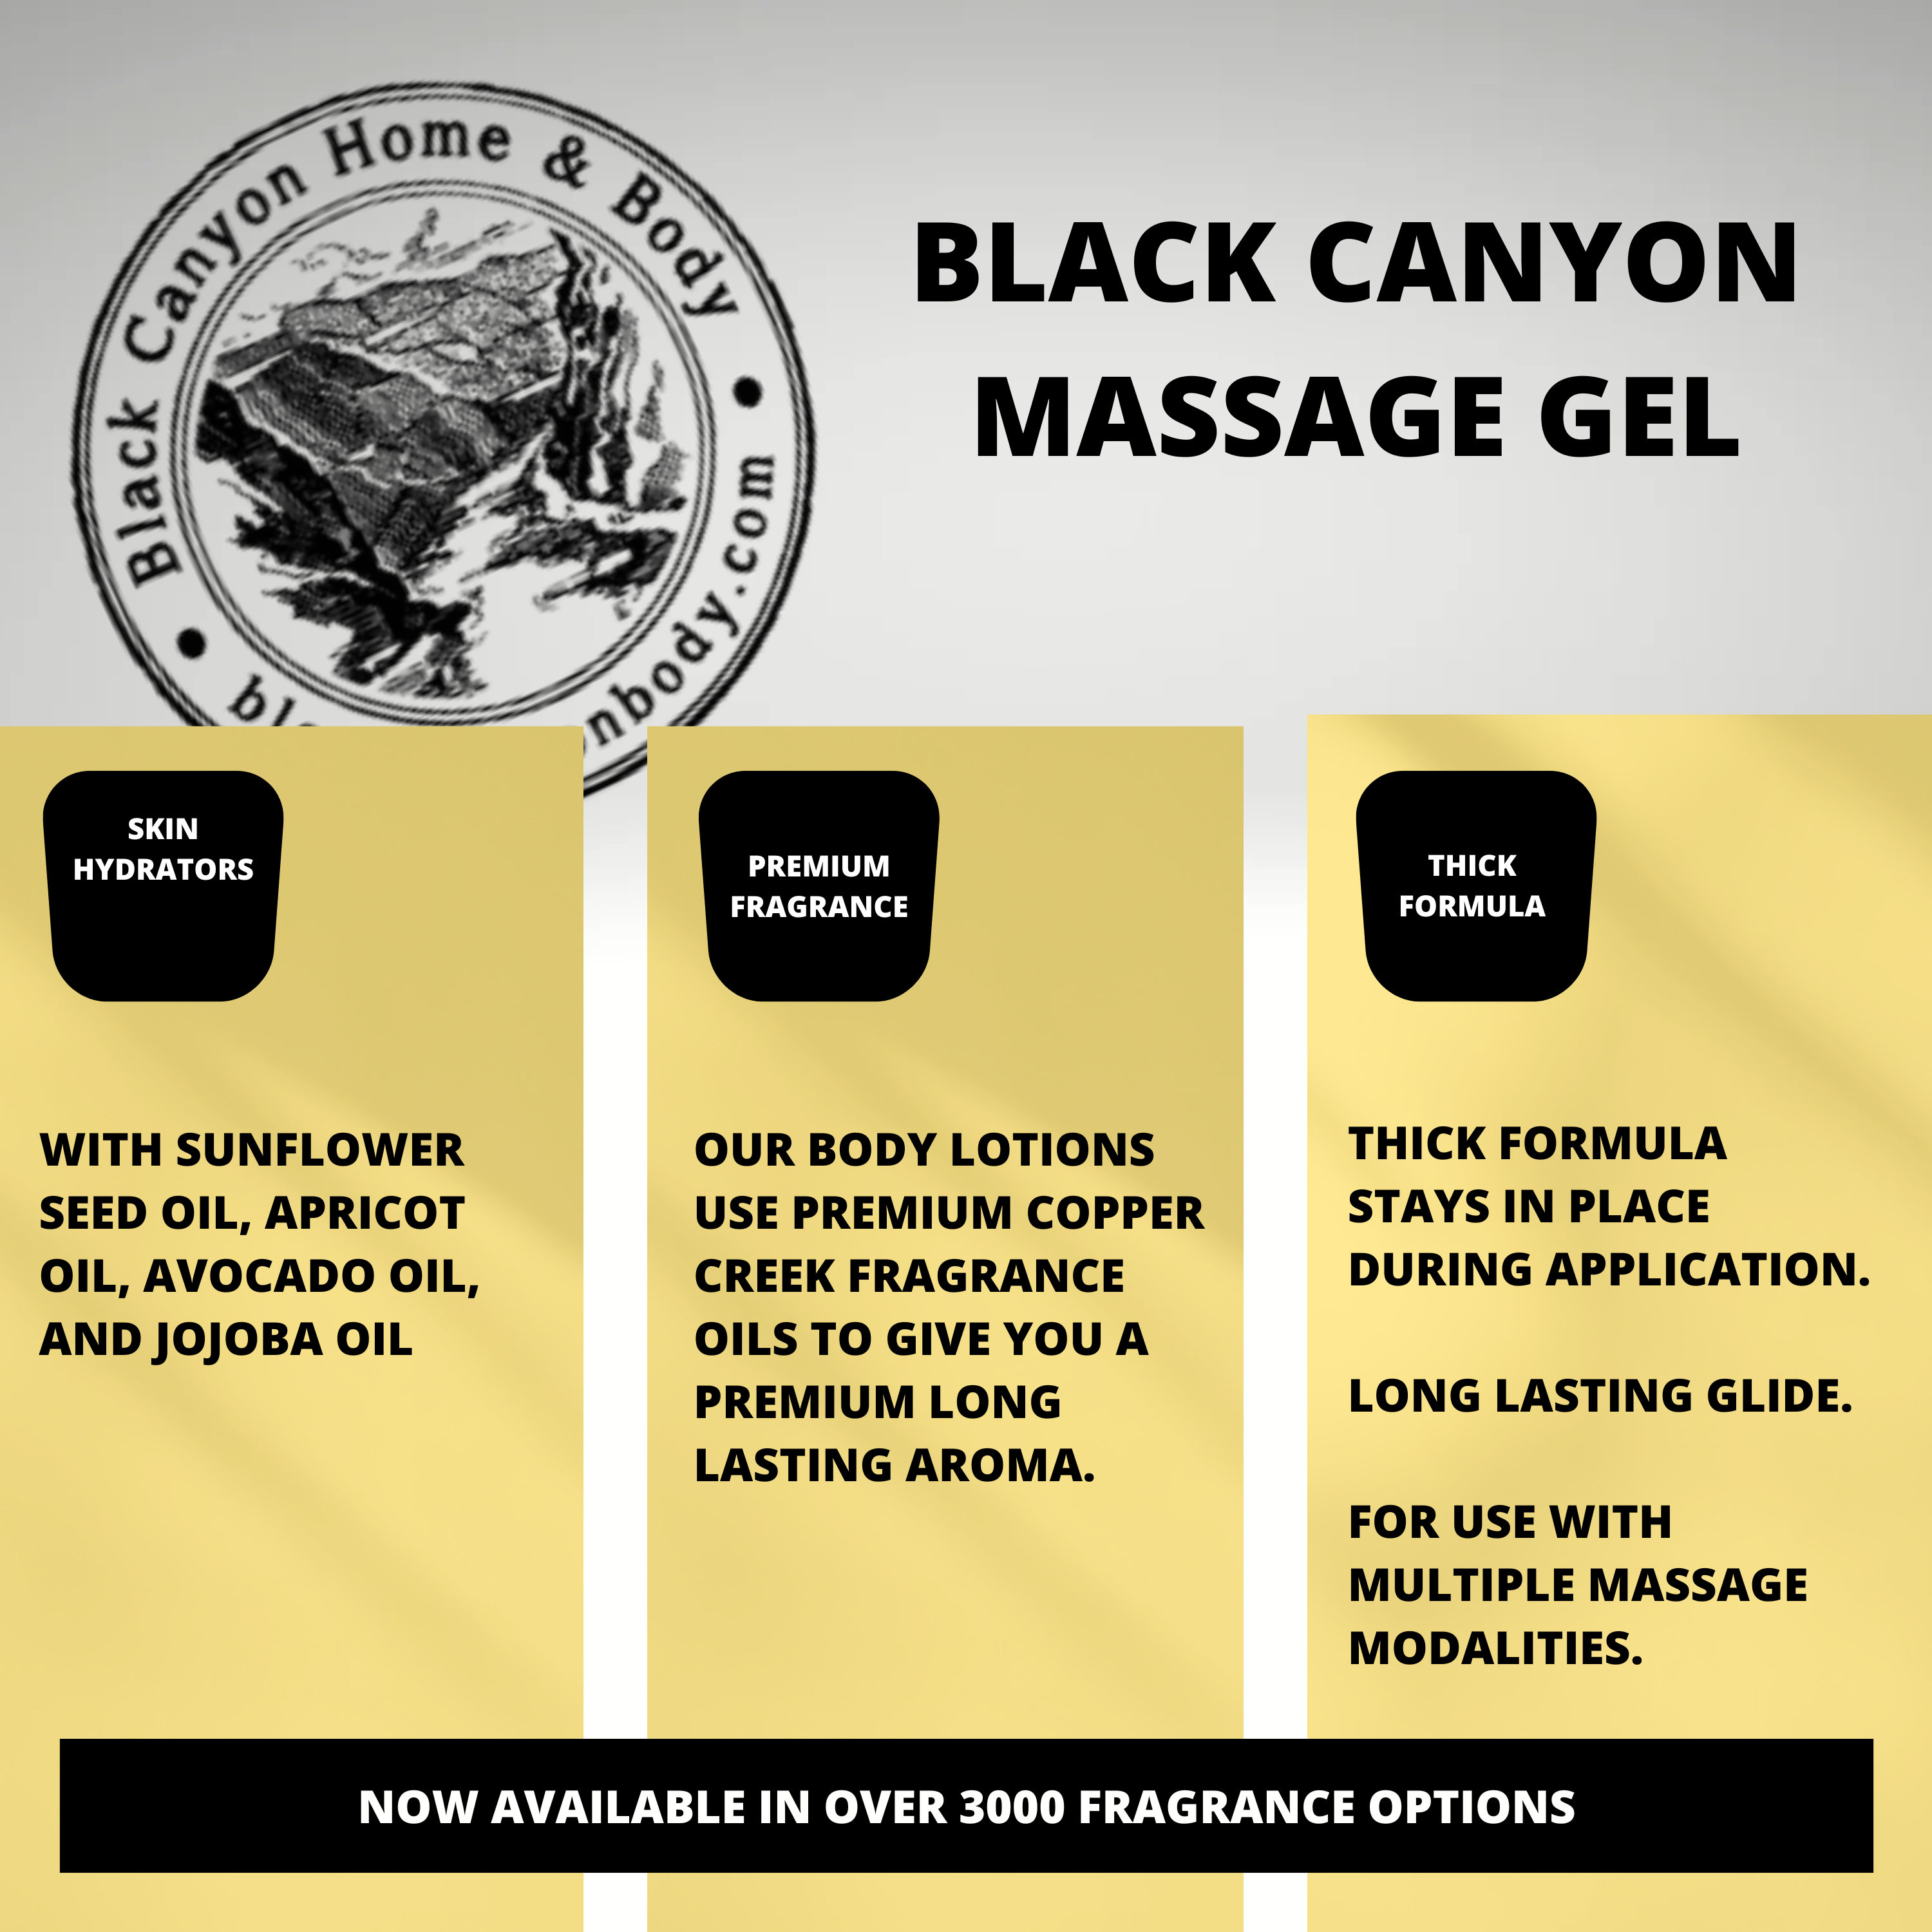 Black Canyon Dark Chocolate Scented Massage Gel